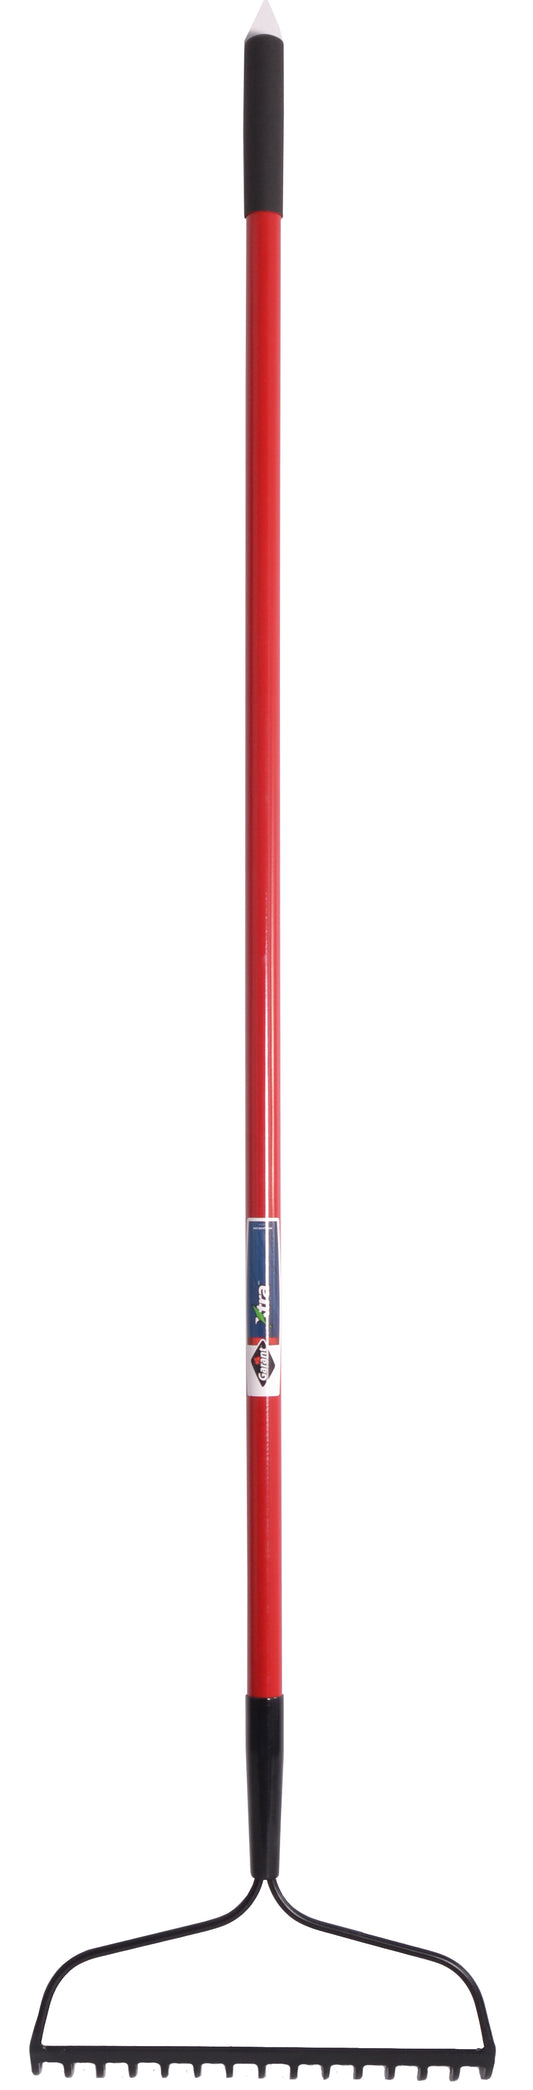 Bow rake, fiberglass handle